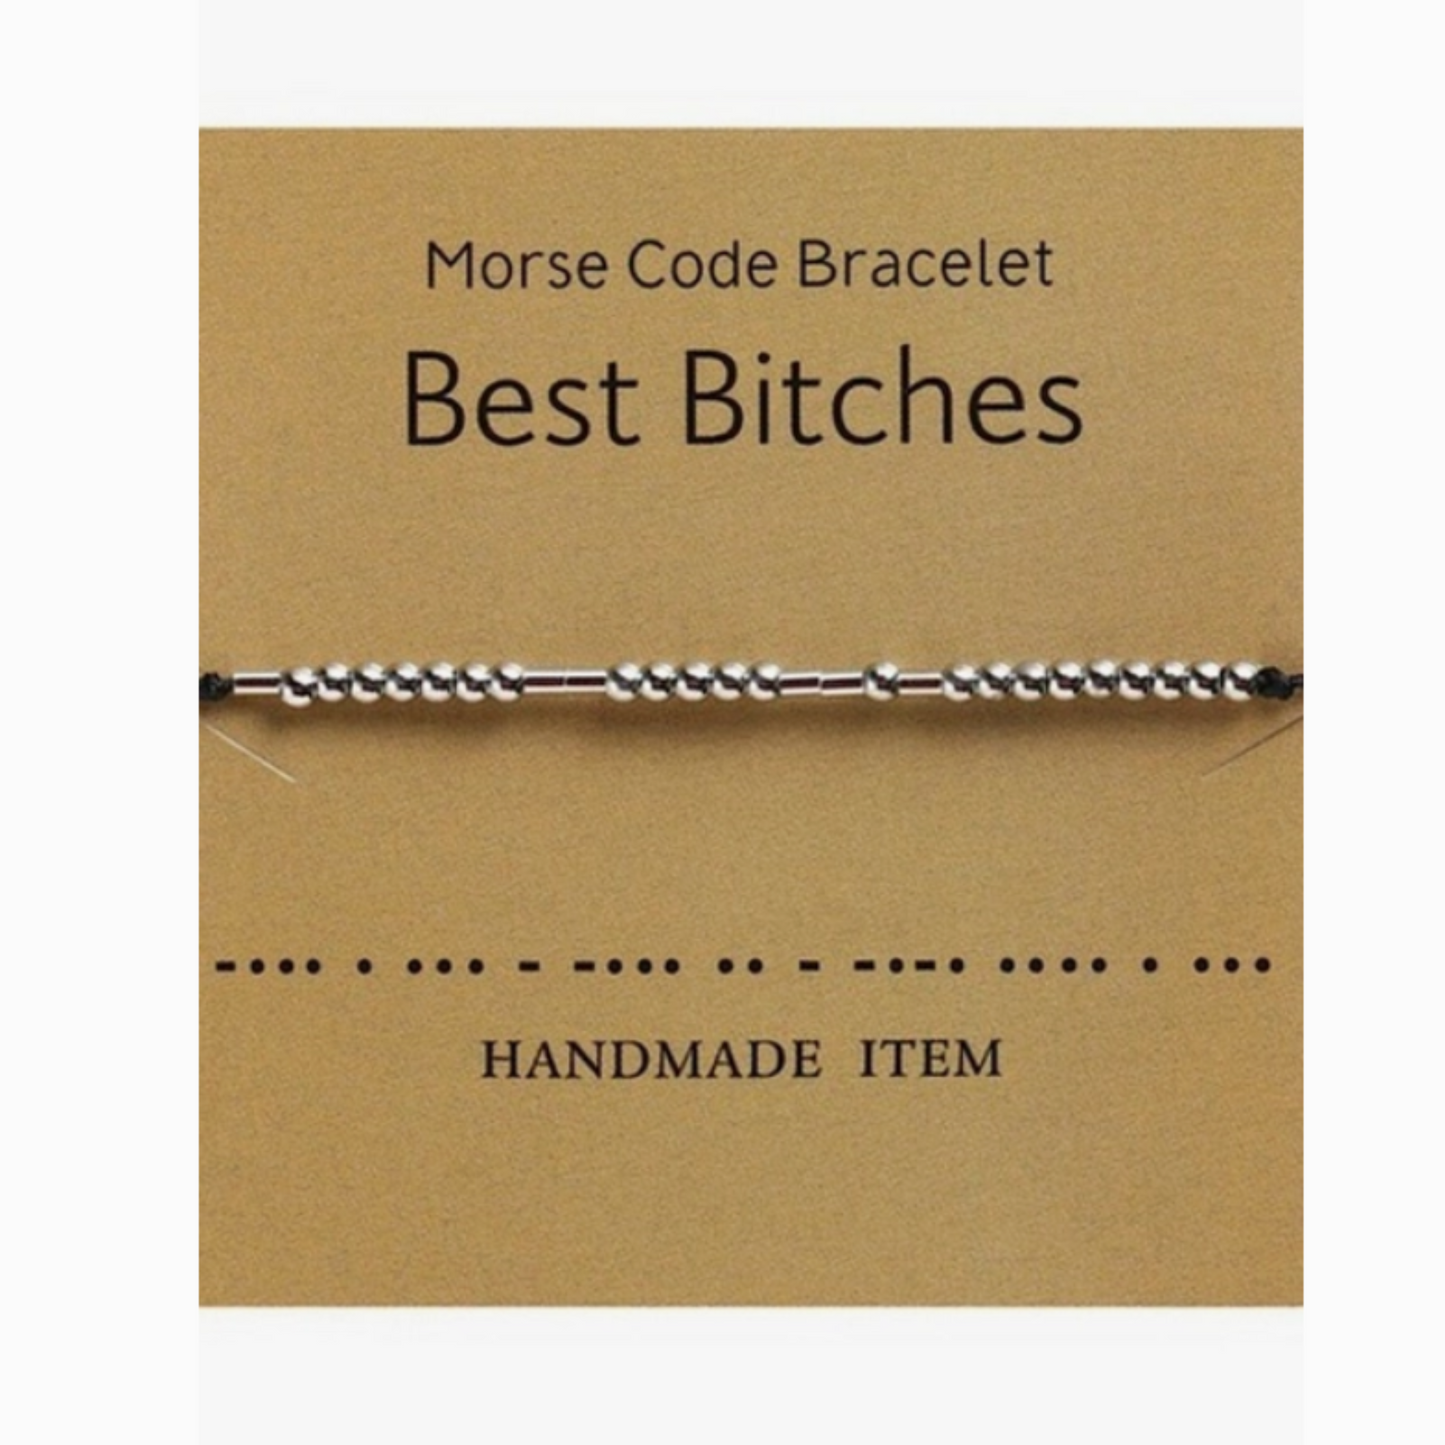 Best Bitches - Morse Code Bracelet